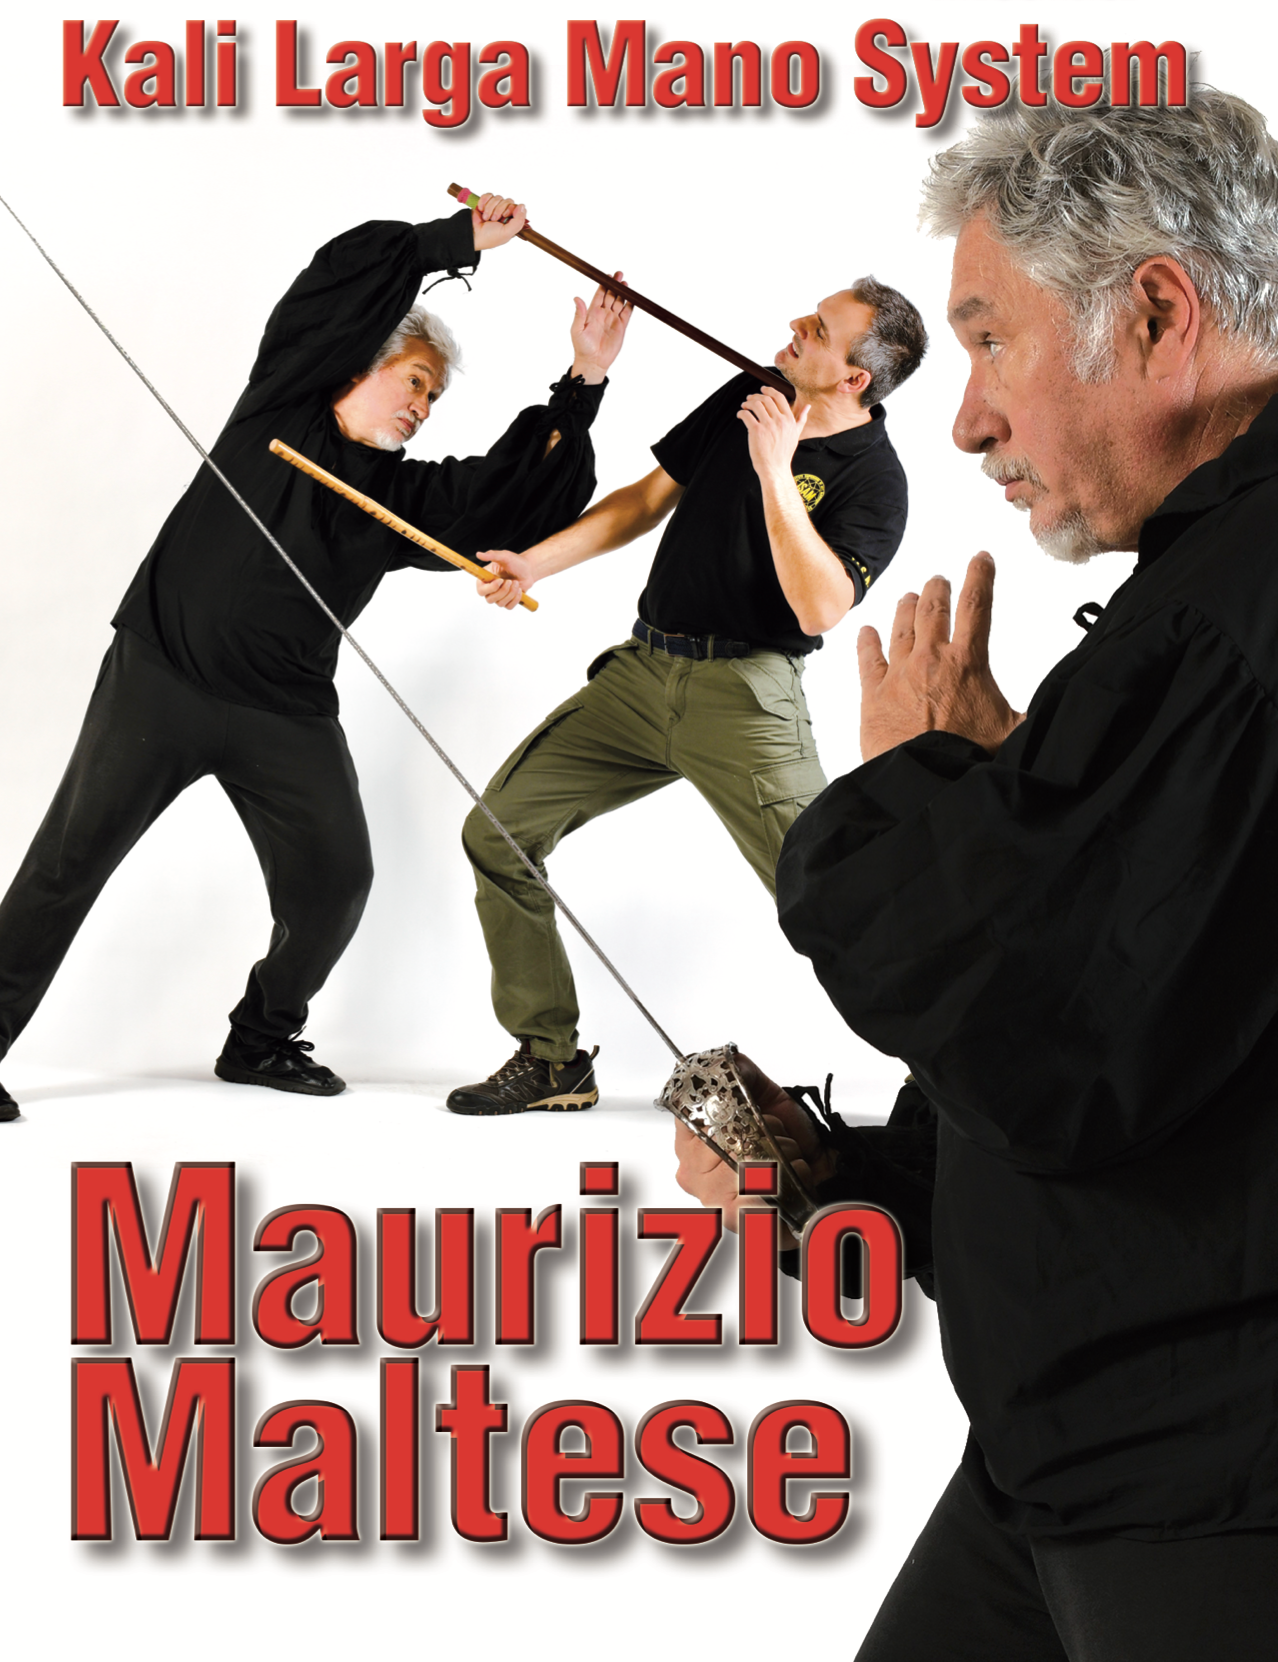 Kali Larga Mano System DVD by Mauricio Maltese - Budovideos